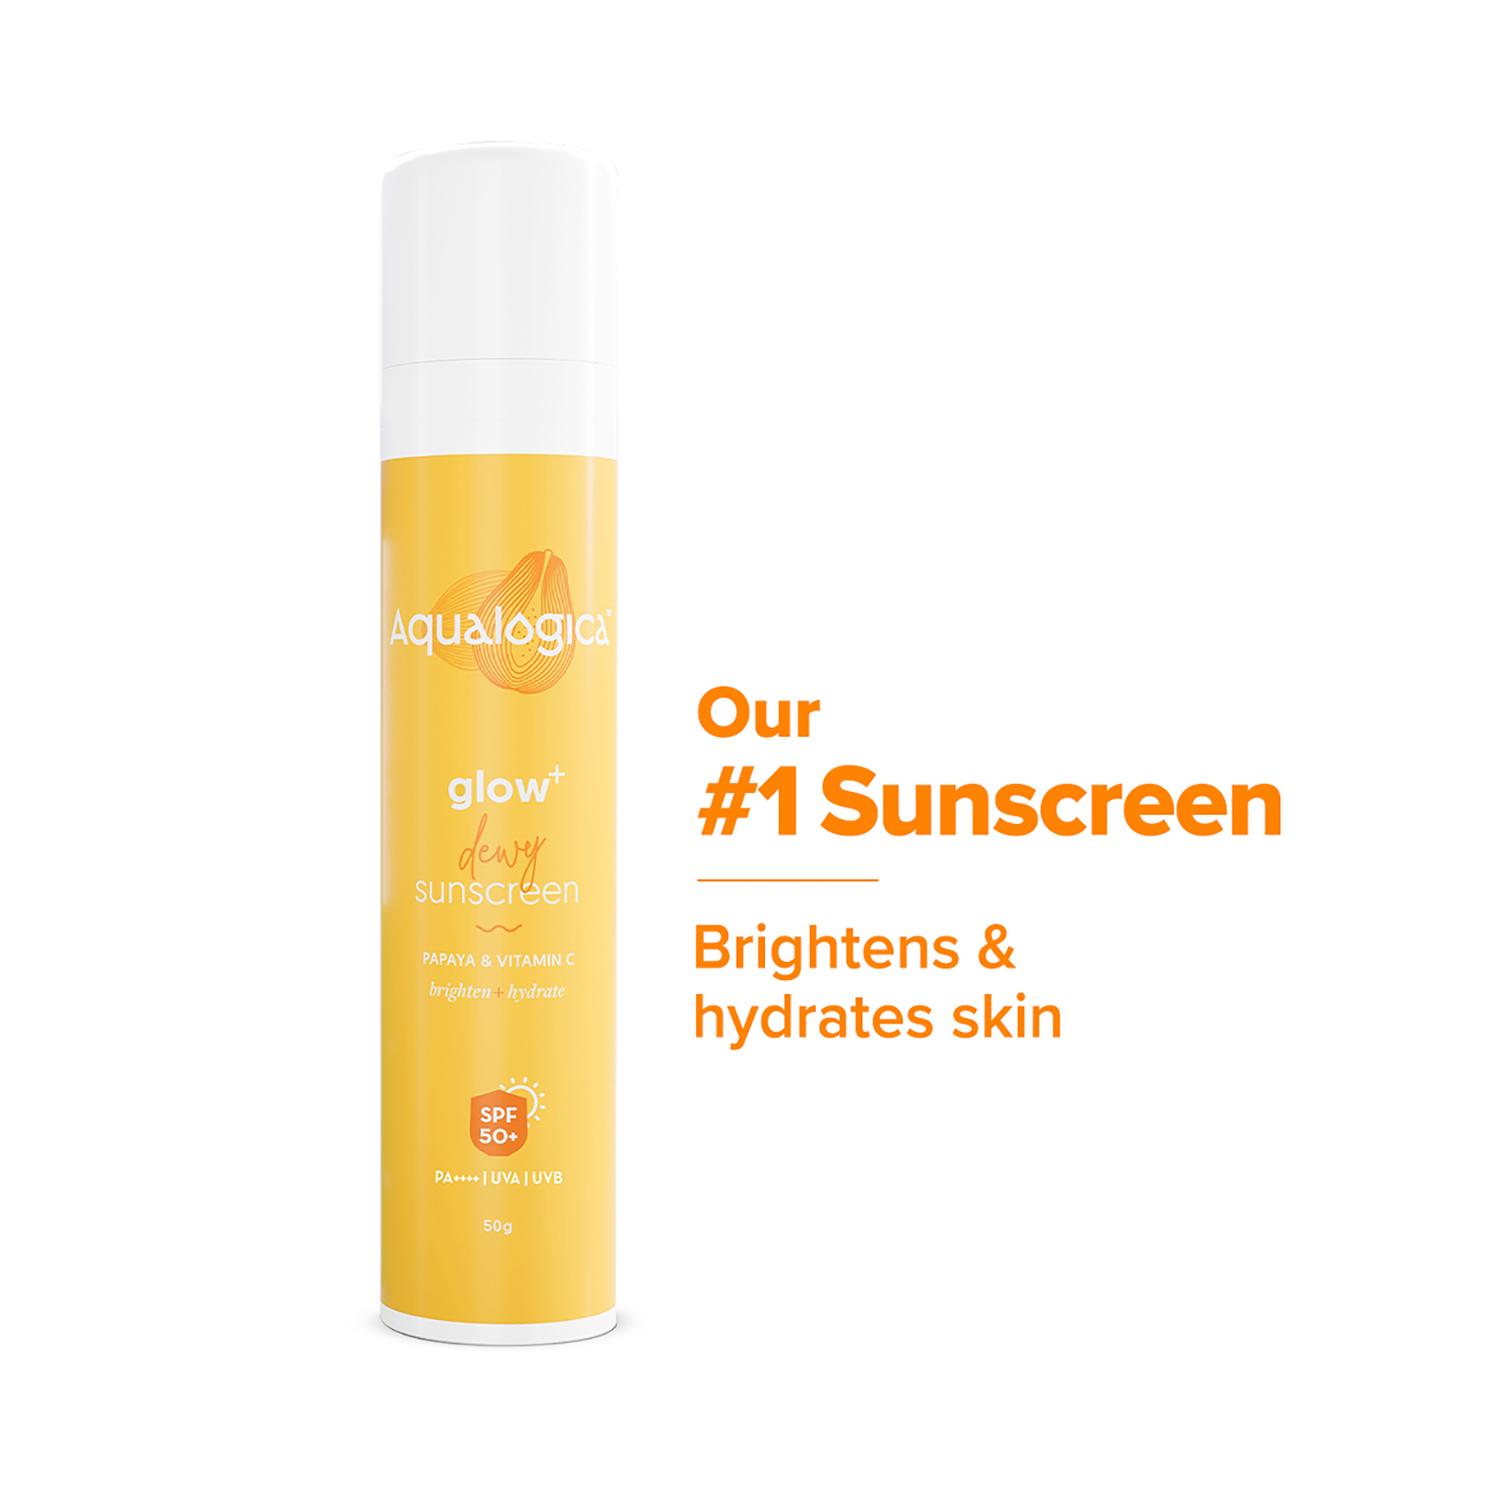 Aqualogica | Aqualogica Glow+ Dewy Sunscreen (50g)